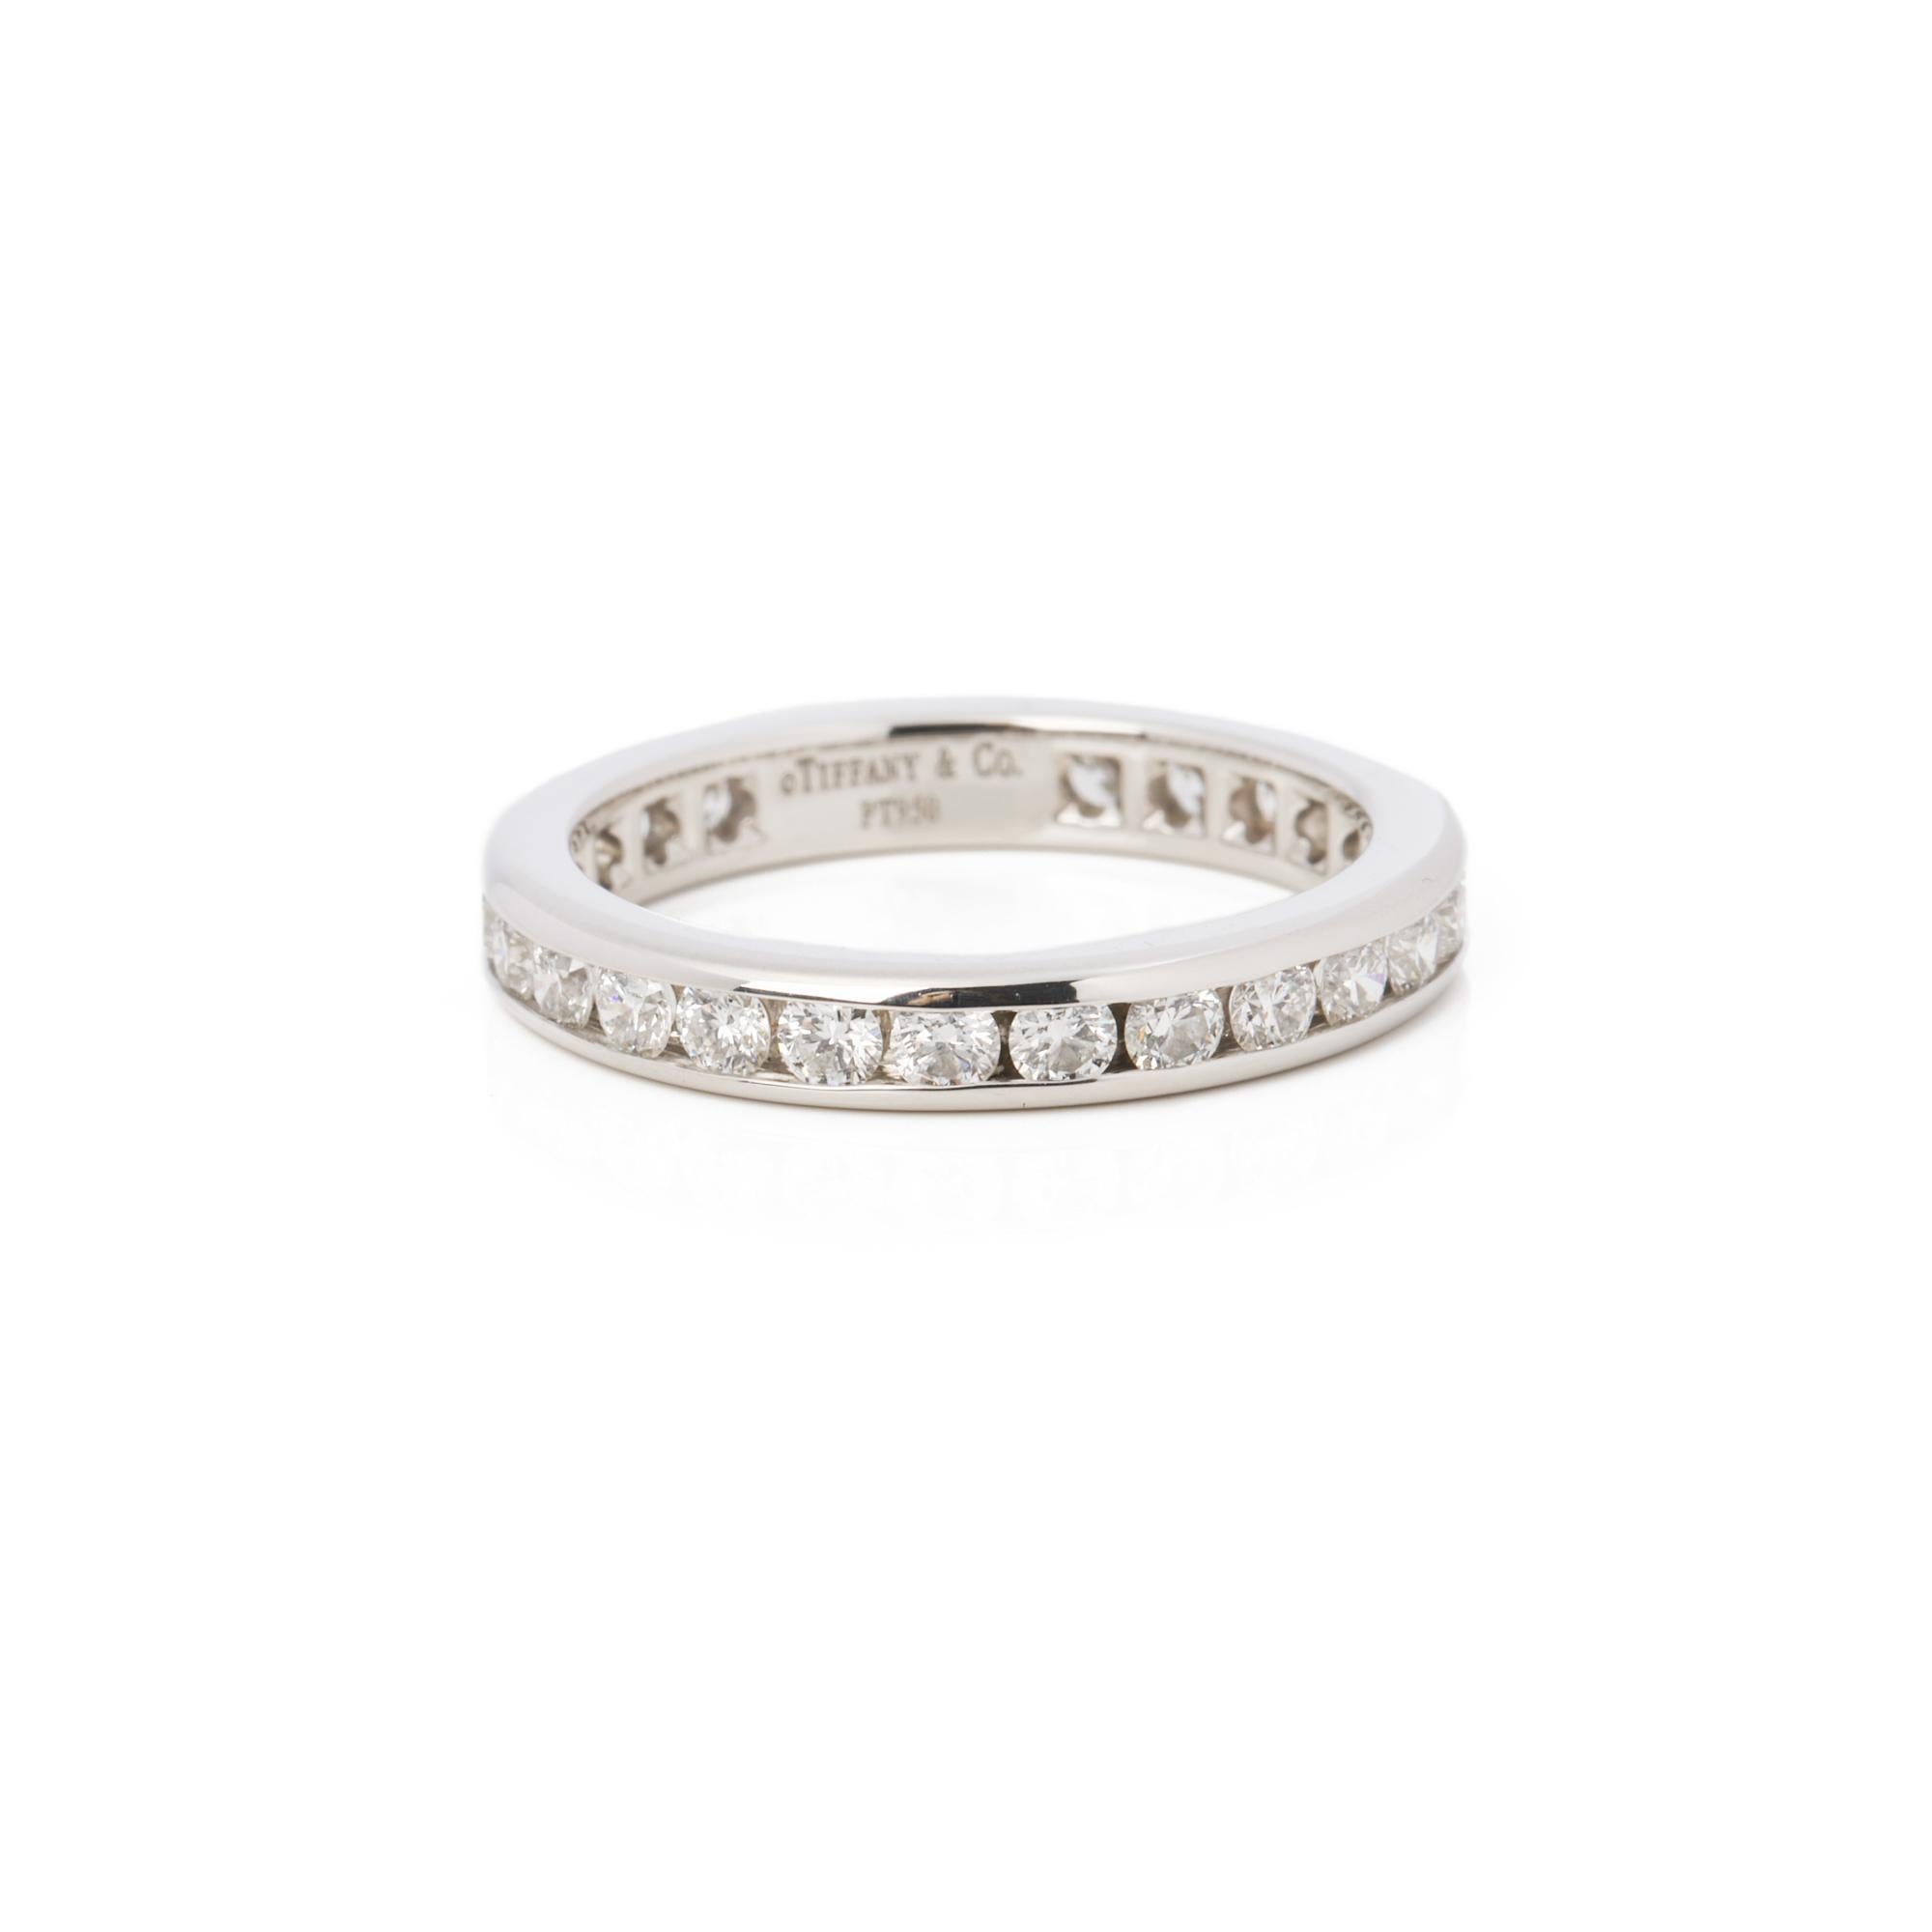 Tiffany & Co. Brilliant Cut Diamond Platinum Full Eternity Ring

Brand- Tiffany & Co.
Model- Full Eternity Ring
Product Type- Ring
Accompanied By- Tiffany & Co. Box
Material(s)- Platinum
Gemstone- Diamond
UK Ring Size- K
EU Ring Size- 50
US Ring